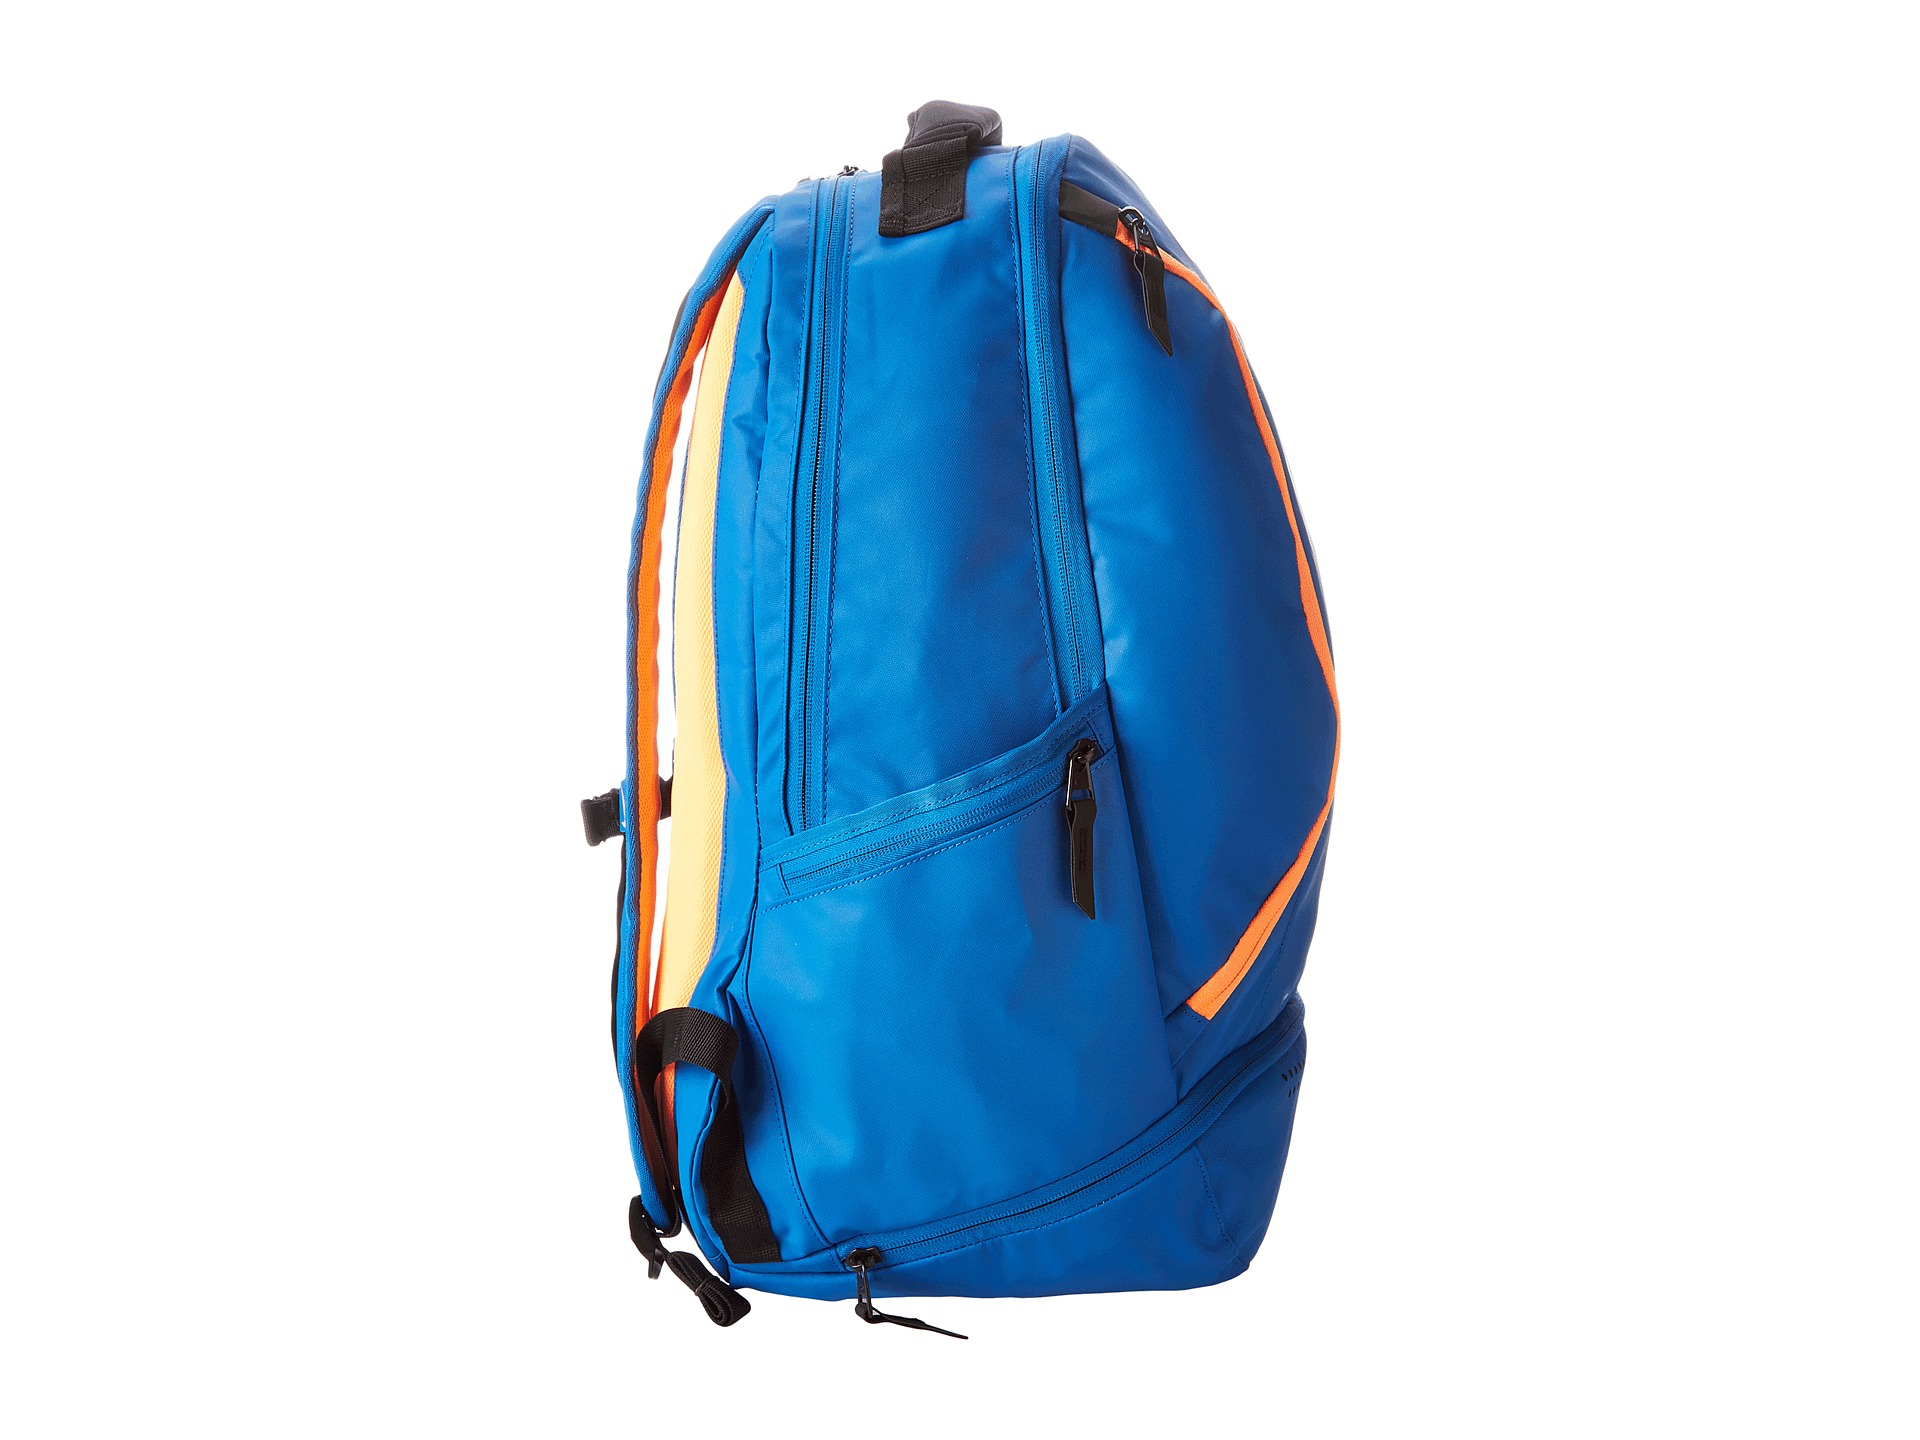 Nike Ultimatum Max Air Gear Backpack in Blue - Lyst